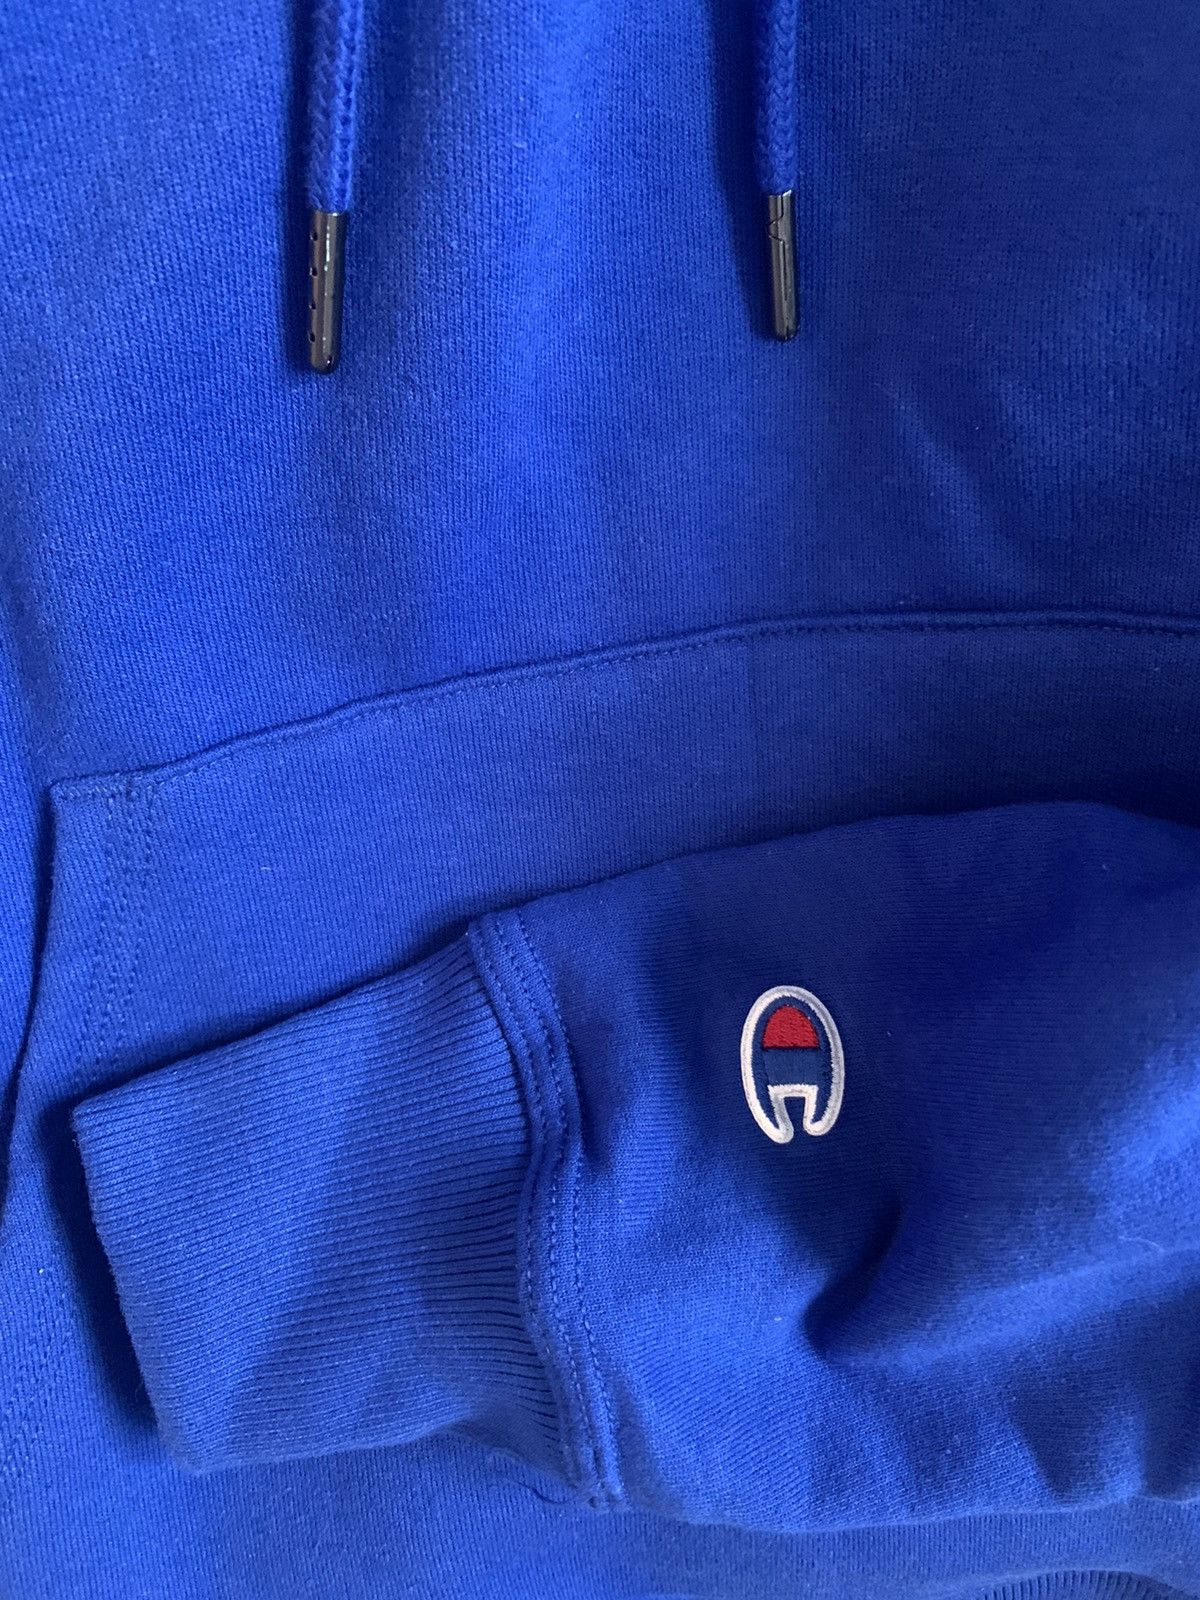 Champion Blue Champion Half-Zip Sweatshirt Size US M / EU 48-50 / 2 - 2 Preview